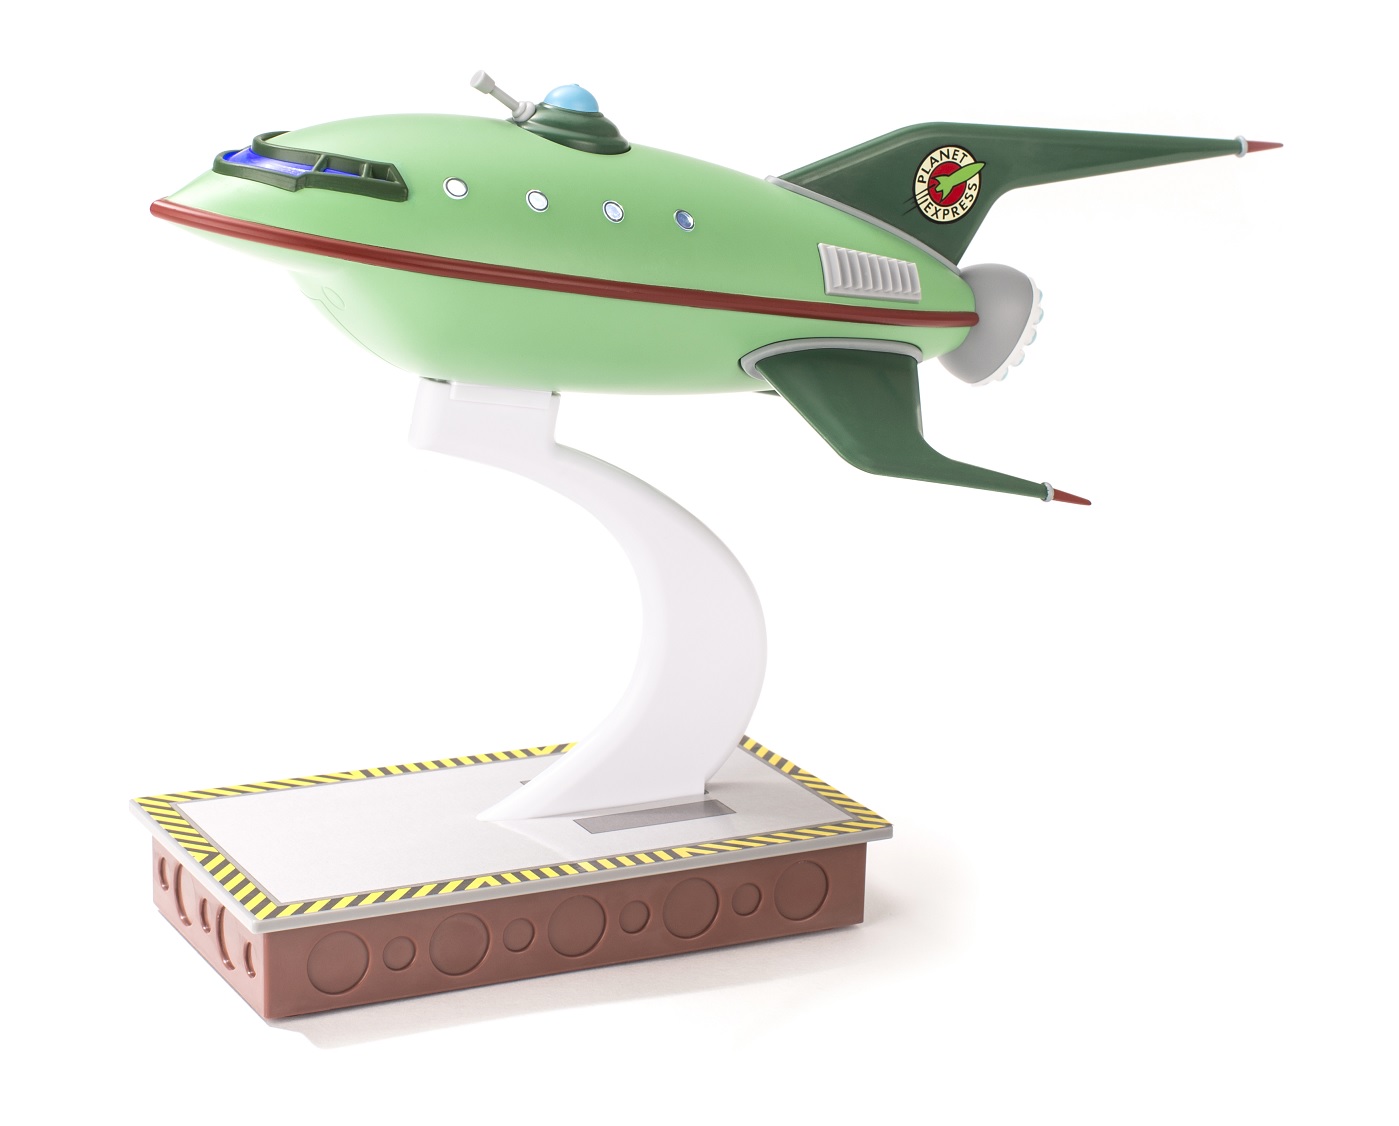 Planet Express Ship Futurama Model Kit Figure Figurine Replica Miniature Gift UK 